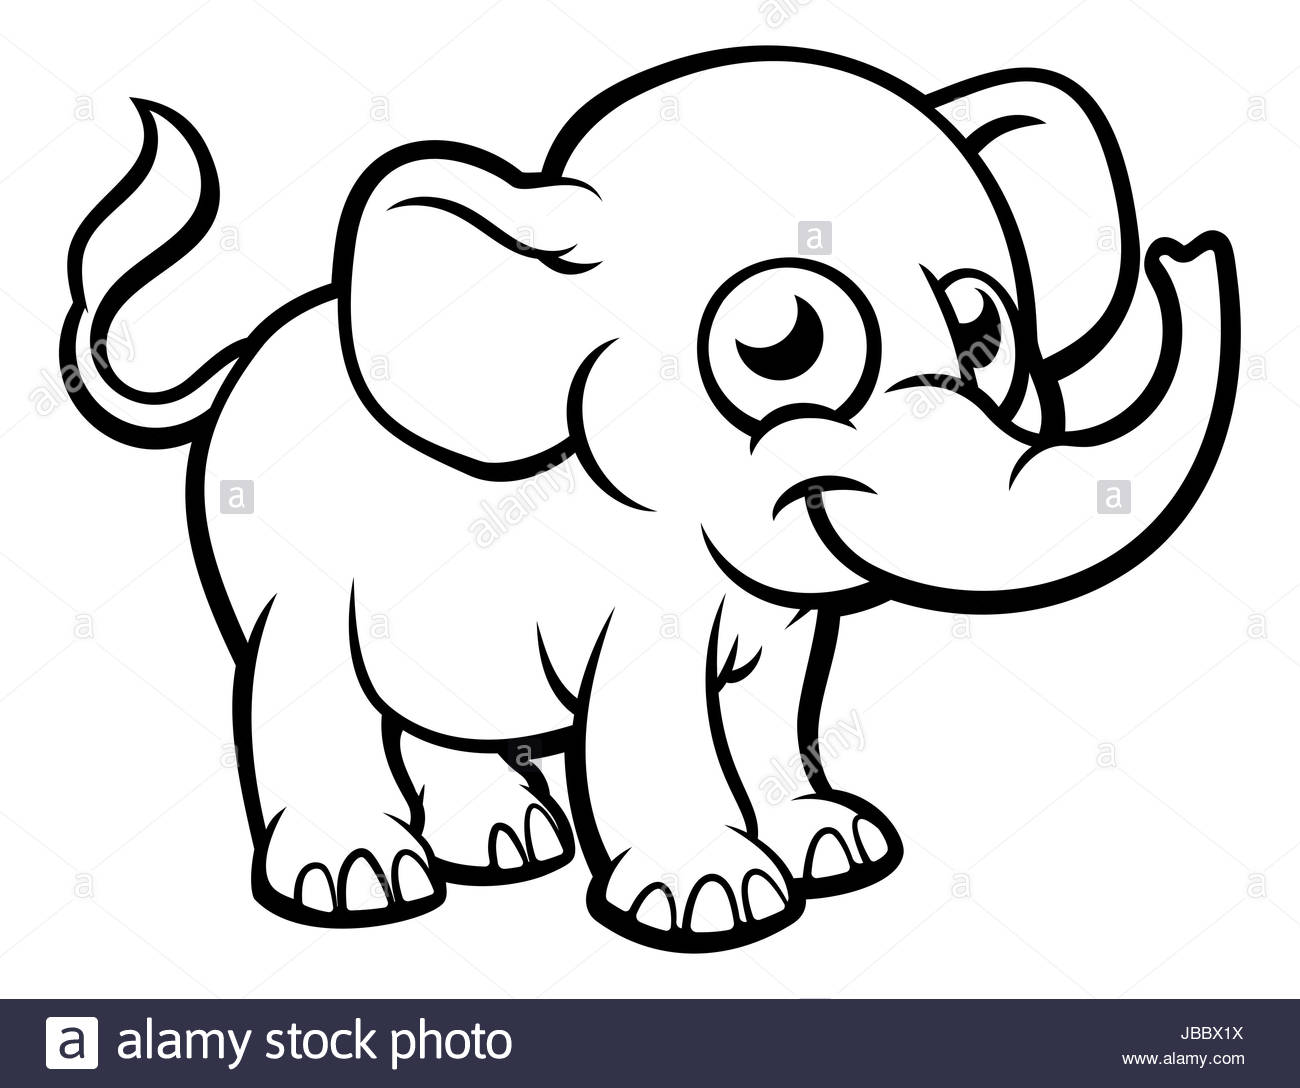 Elephant Outline